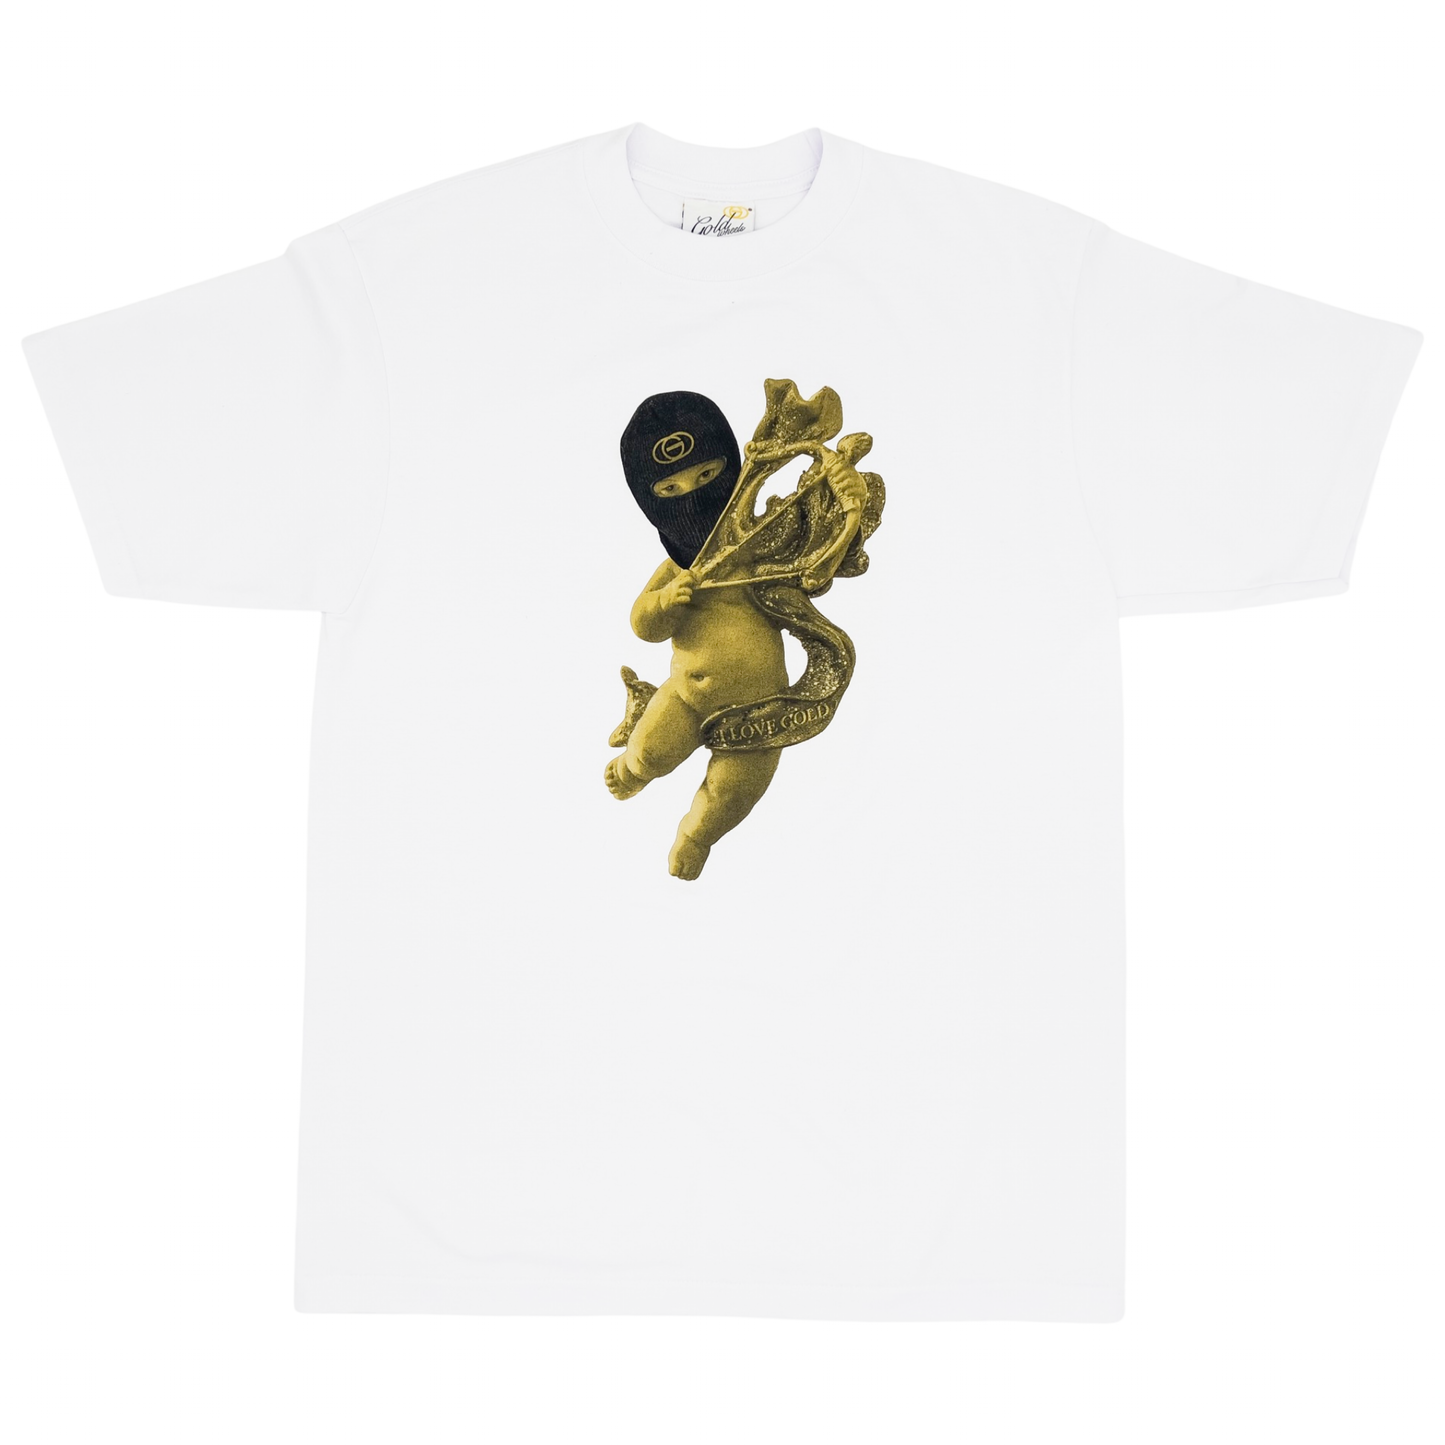 I LOVE GOLD Mens Heavyweight T-Shirt - WHITE | Gold Wheels Co.